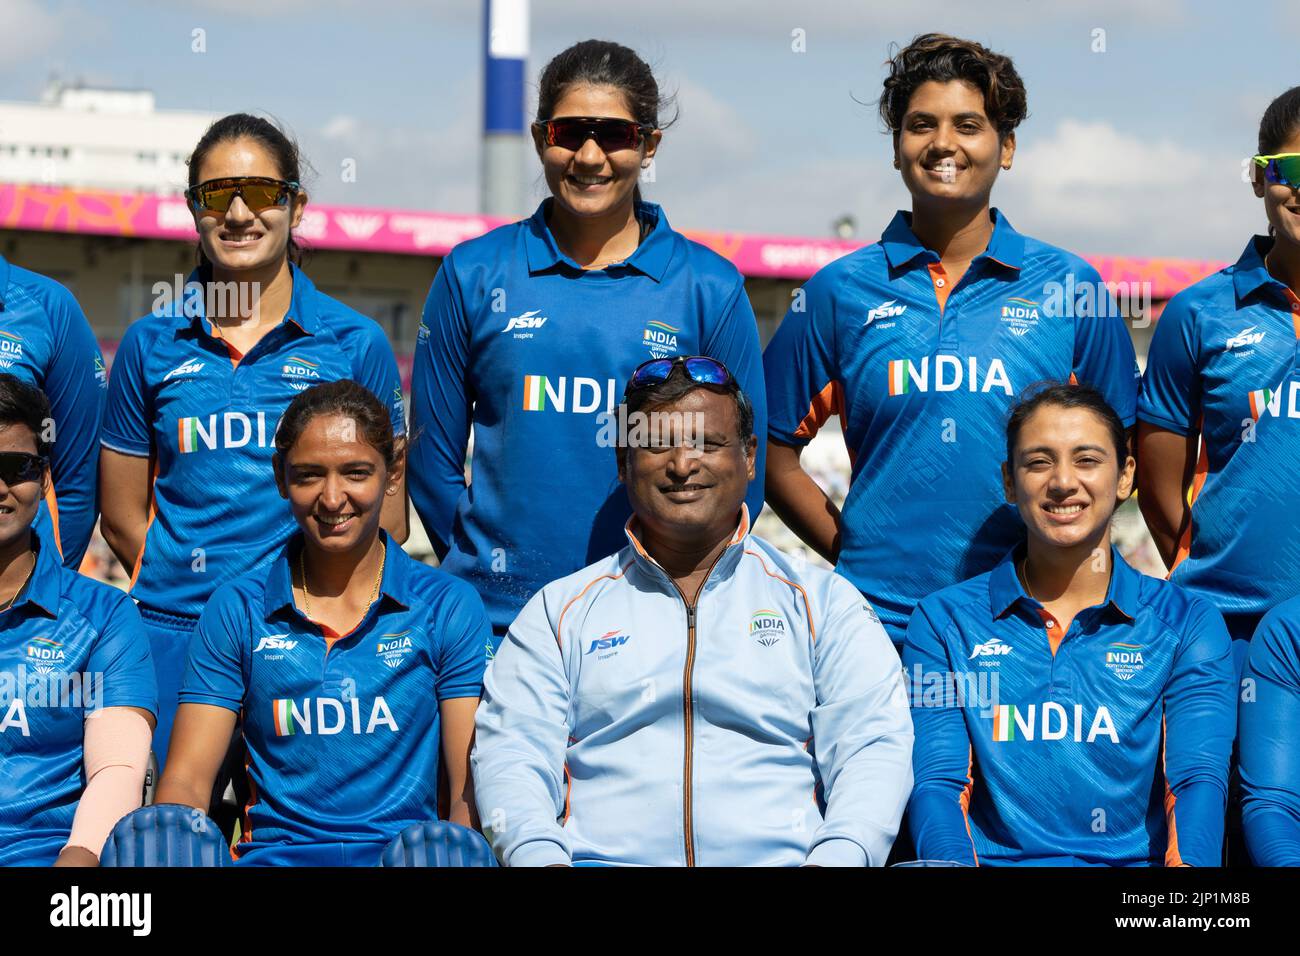 06-8-22 - The Women’s Indian Cricket Team at Edgbaston Cricket Ground during the Birmingham 2022 Commonwealth Games in Birmingham. Stock Photo